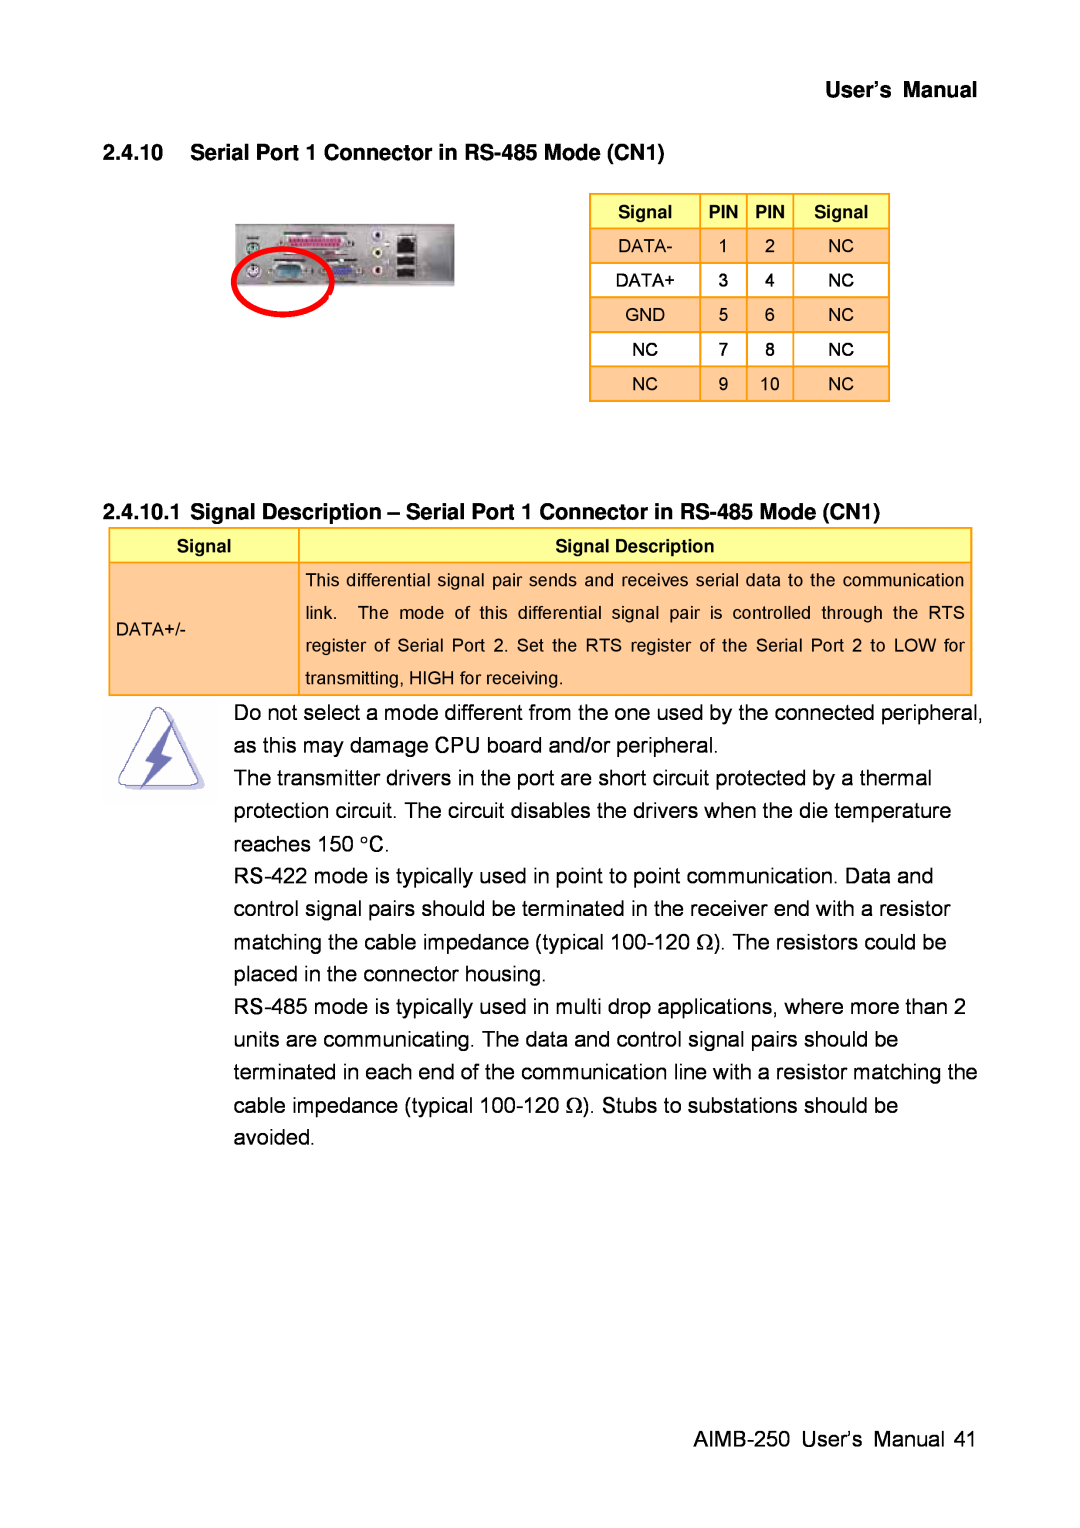 Advantech AIMB-250 user manual Serial Port 1 Connector in RS-485 Mode CN1, User’s Manual 